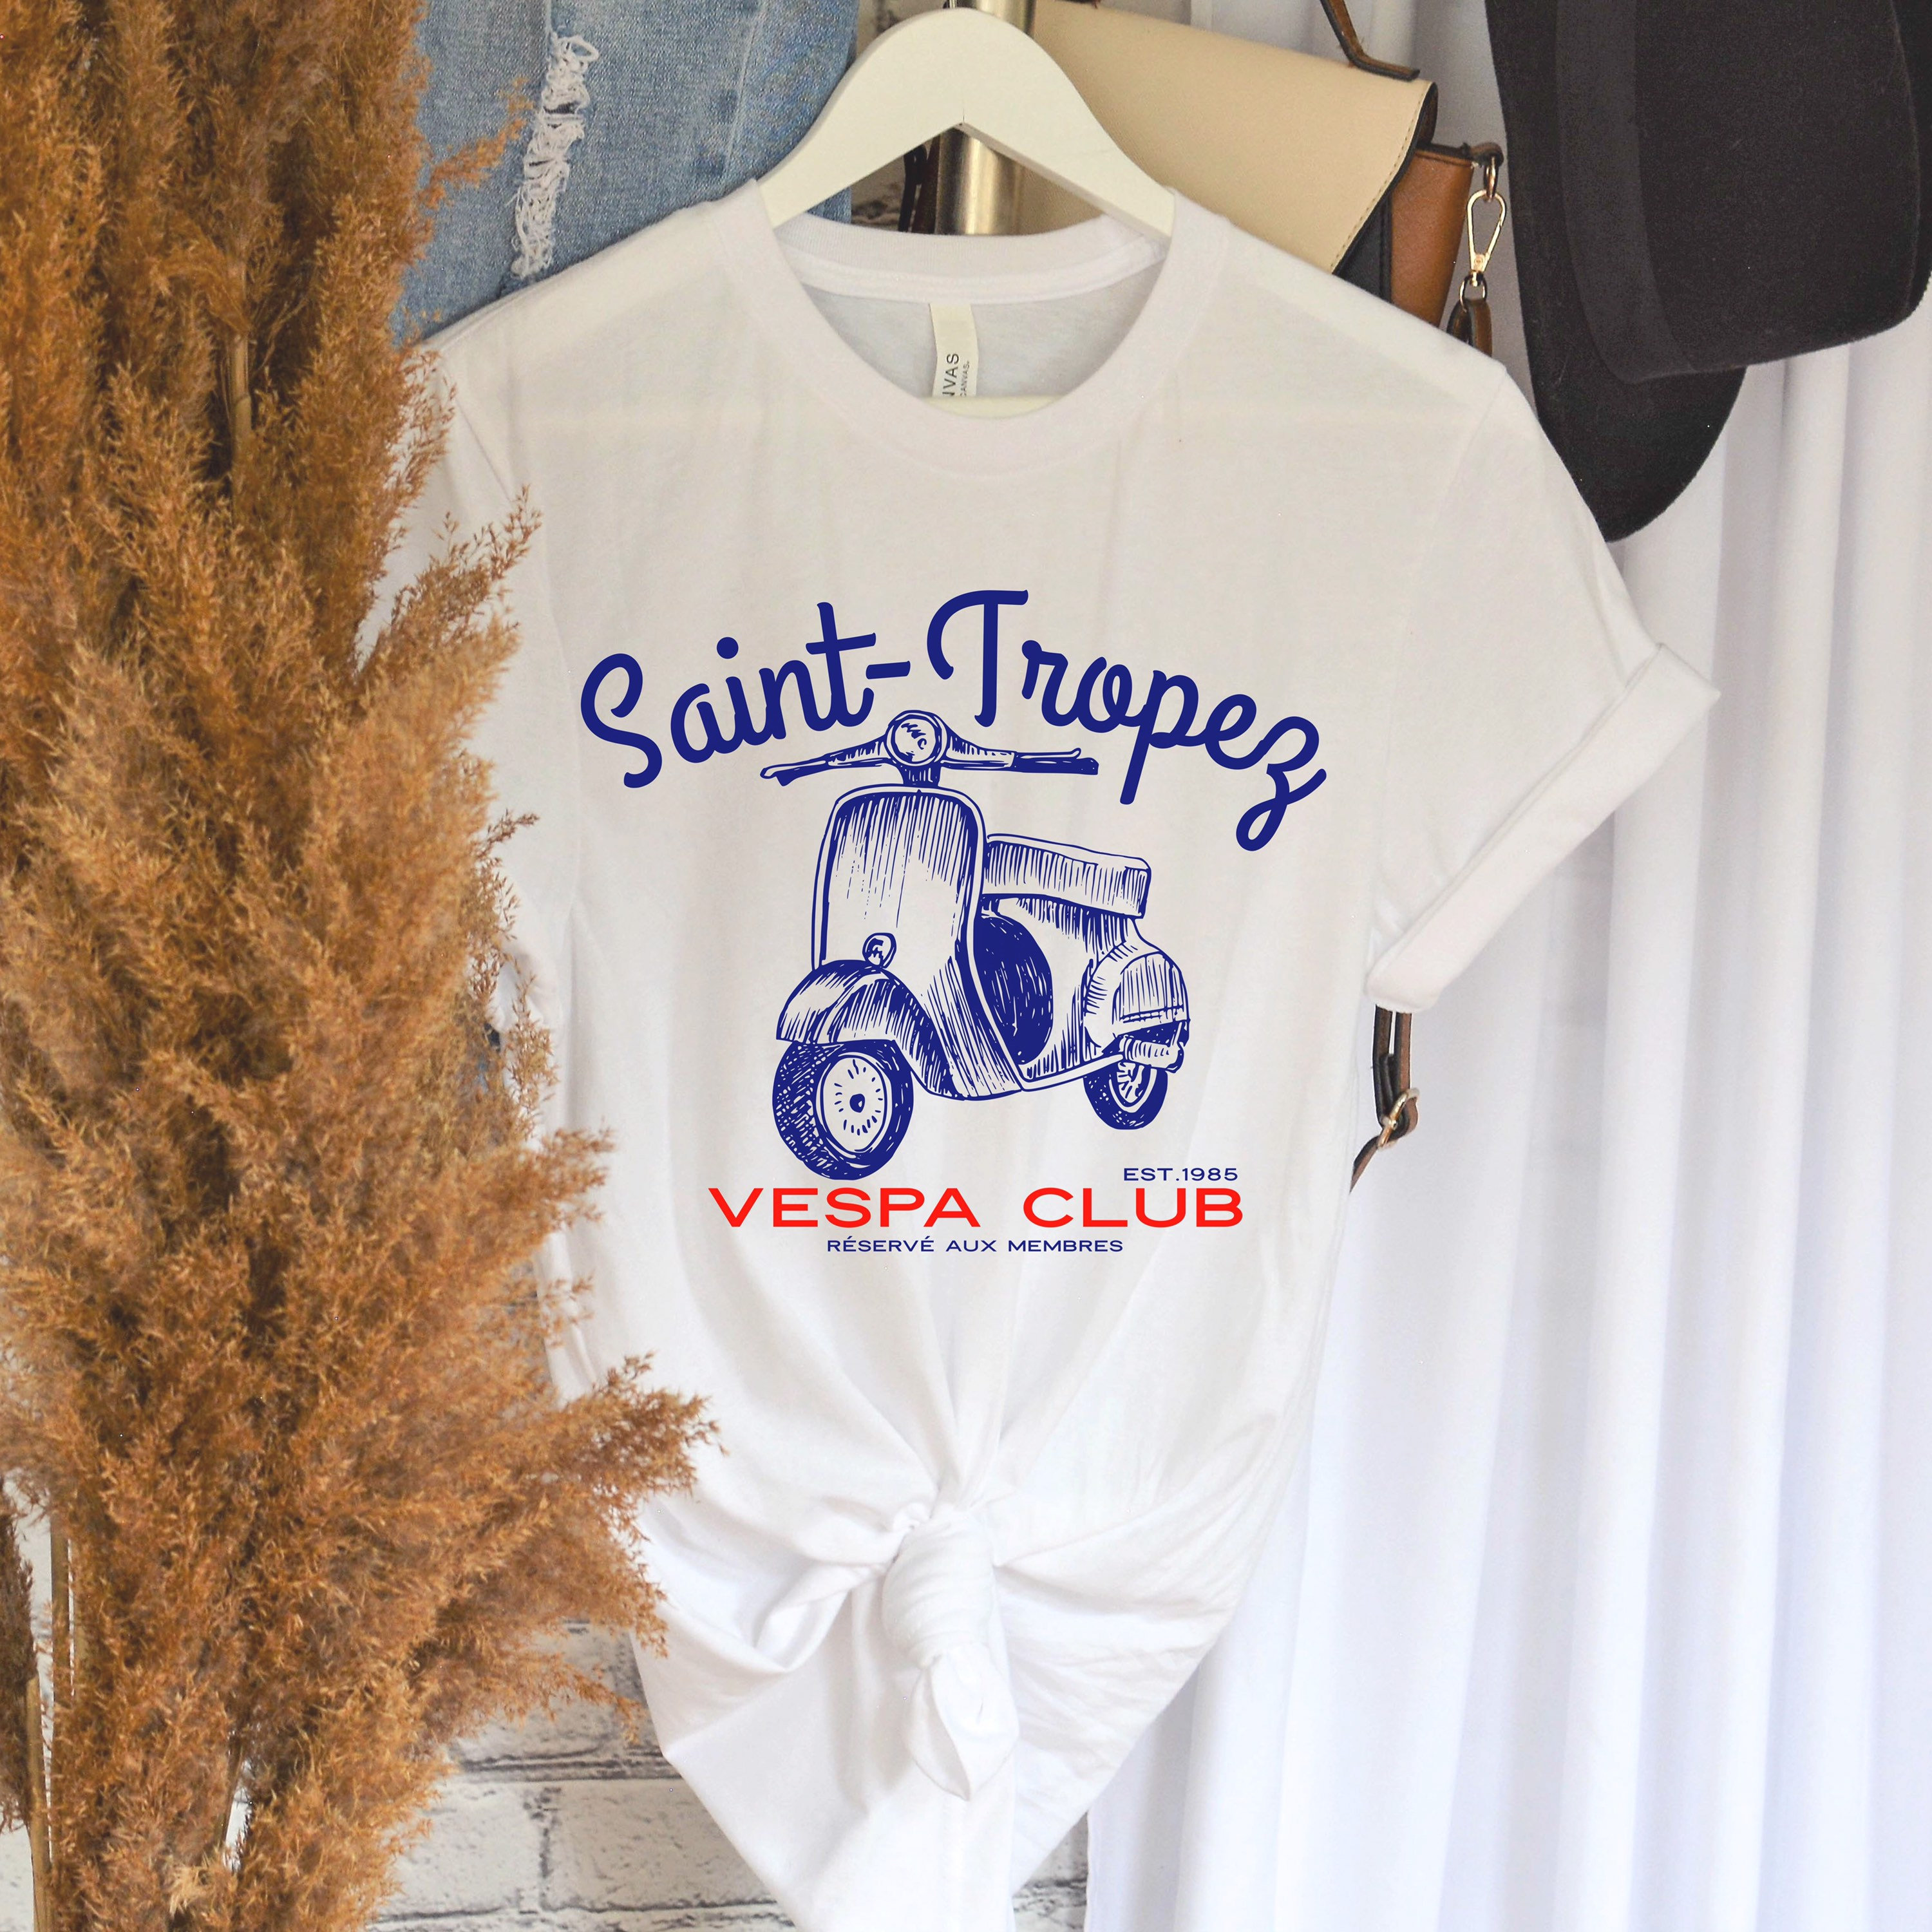 Saint Tropez T Shirt - Etsy